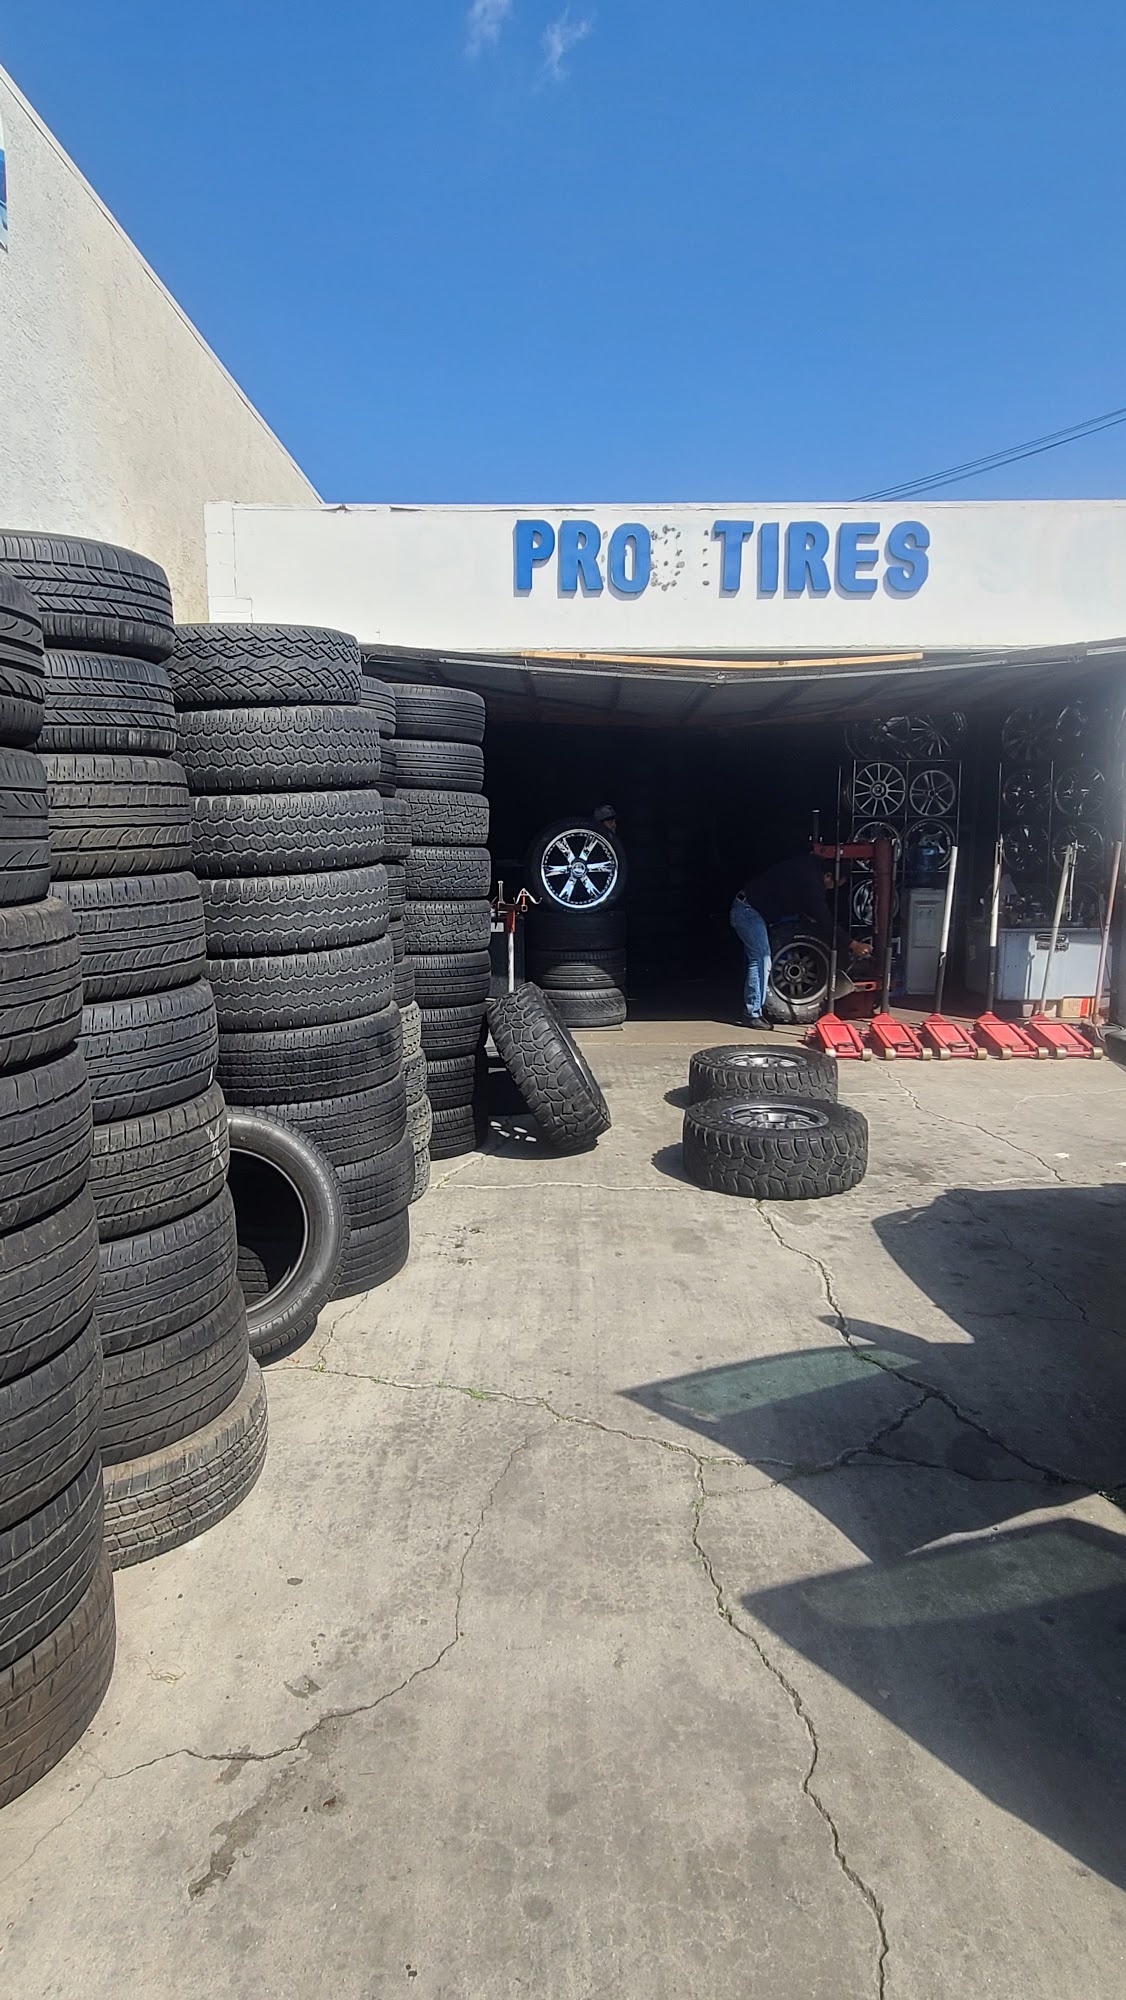 Pro Tires